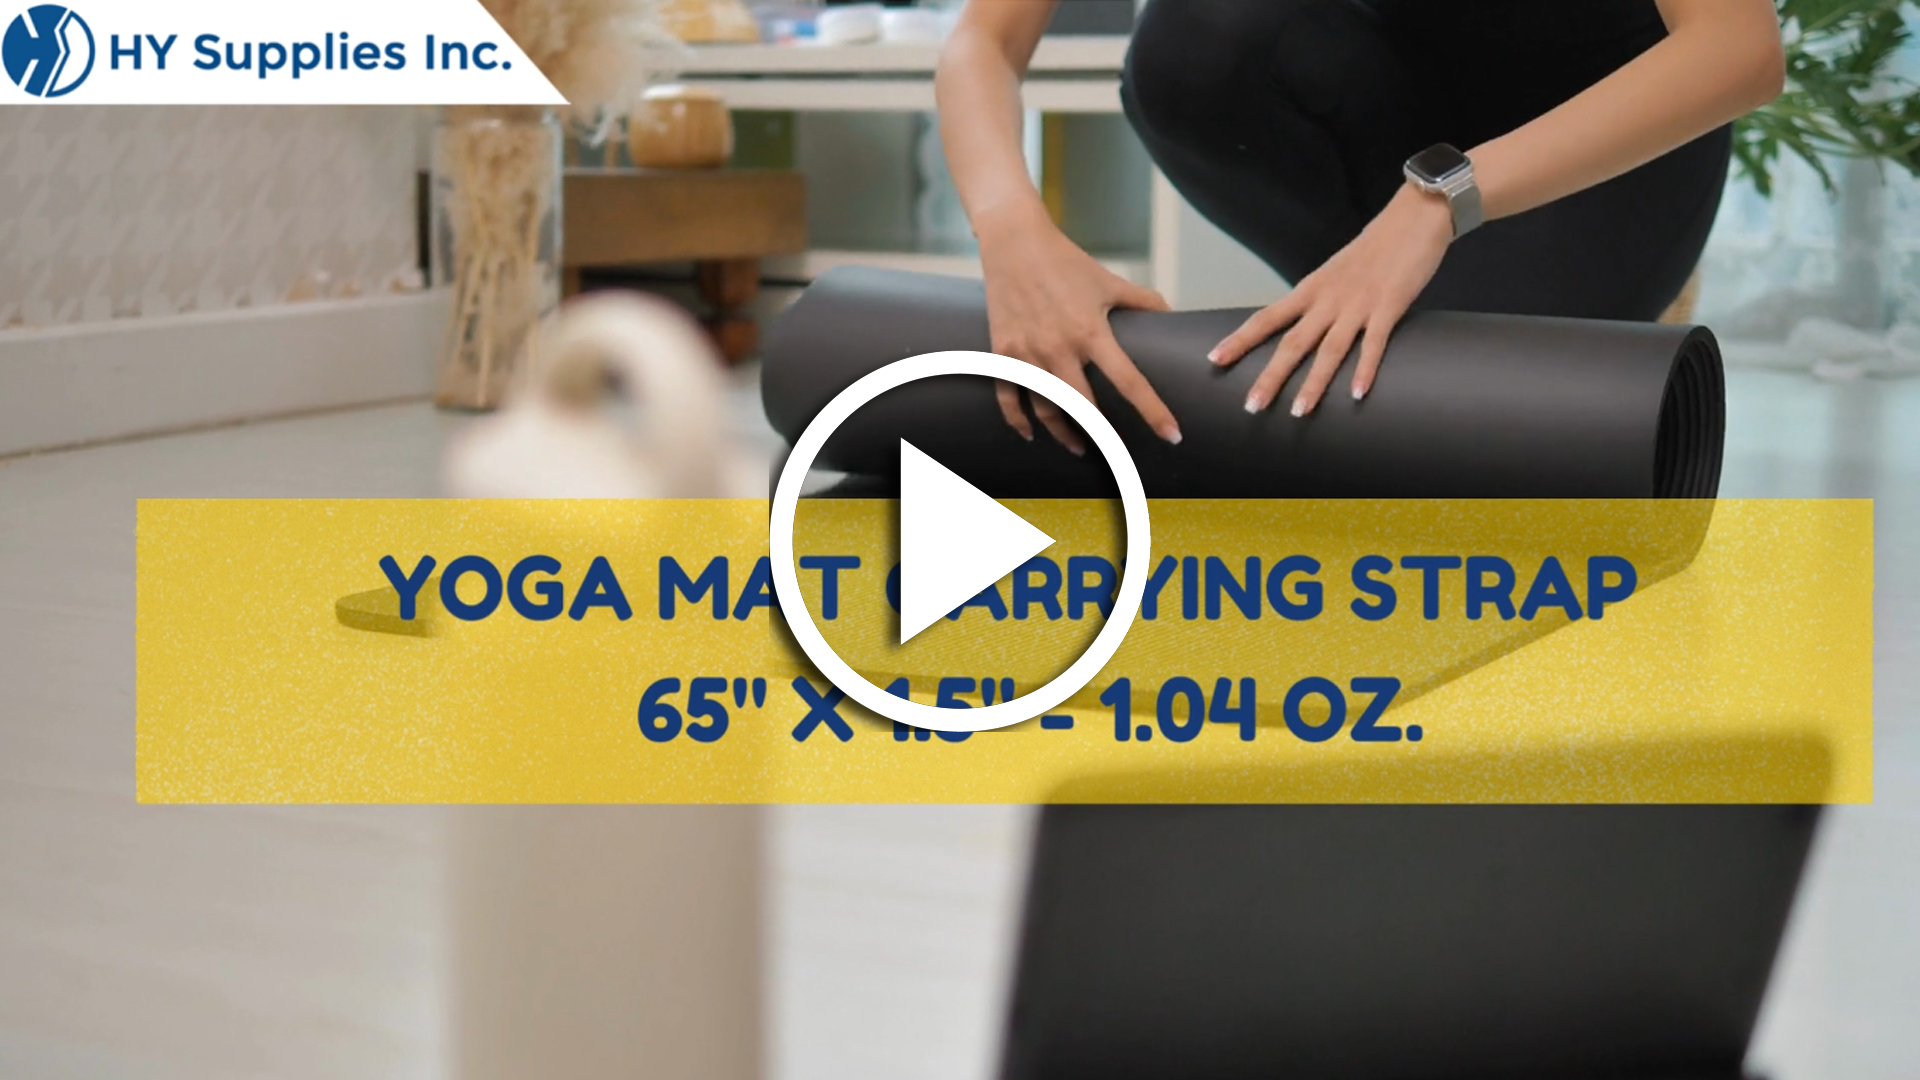 Yoga Mat Carrying Strap - 65" x 1.5" - 1.04 oz.